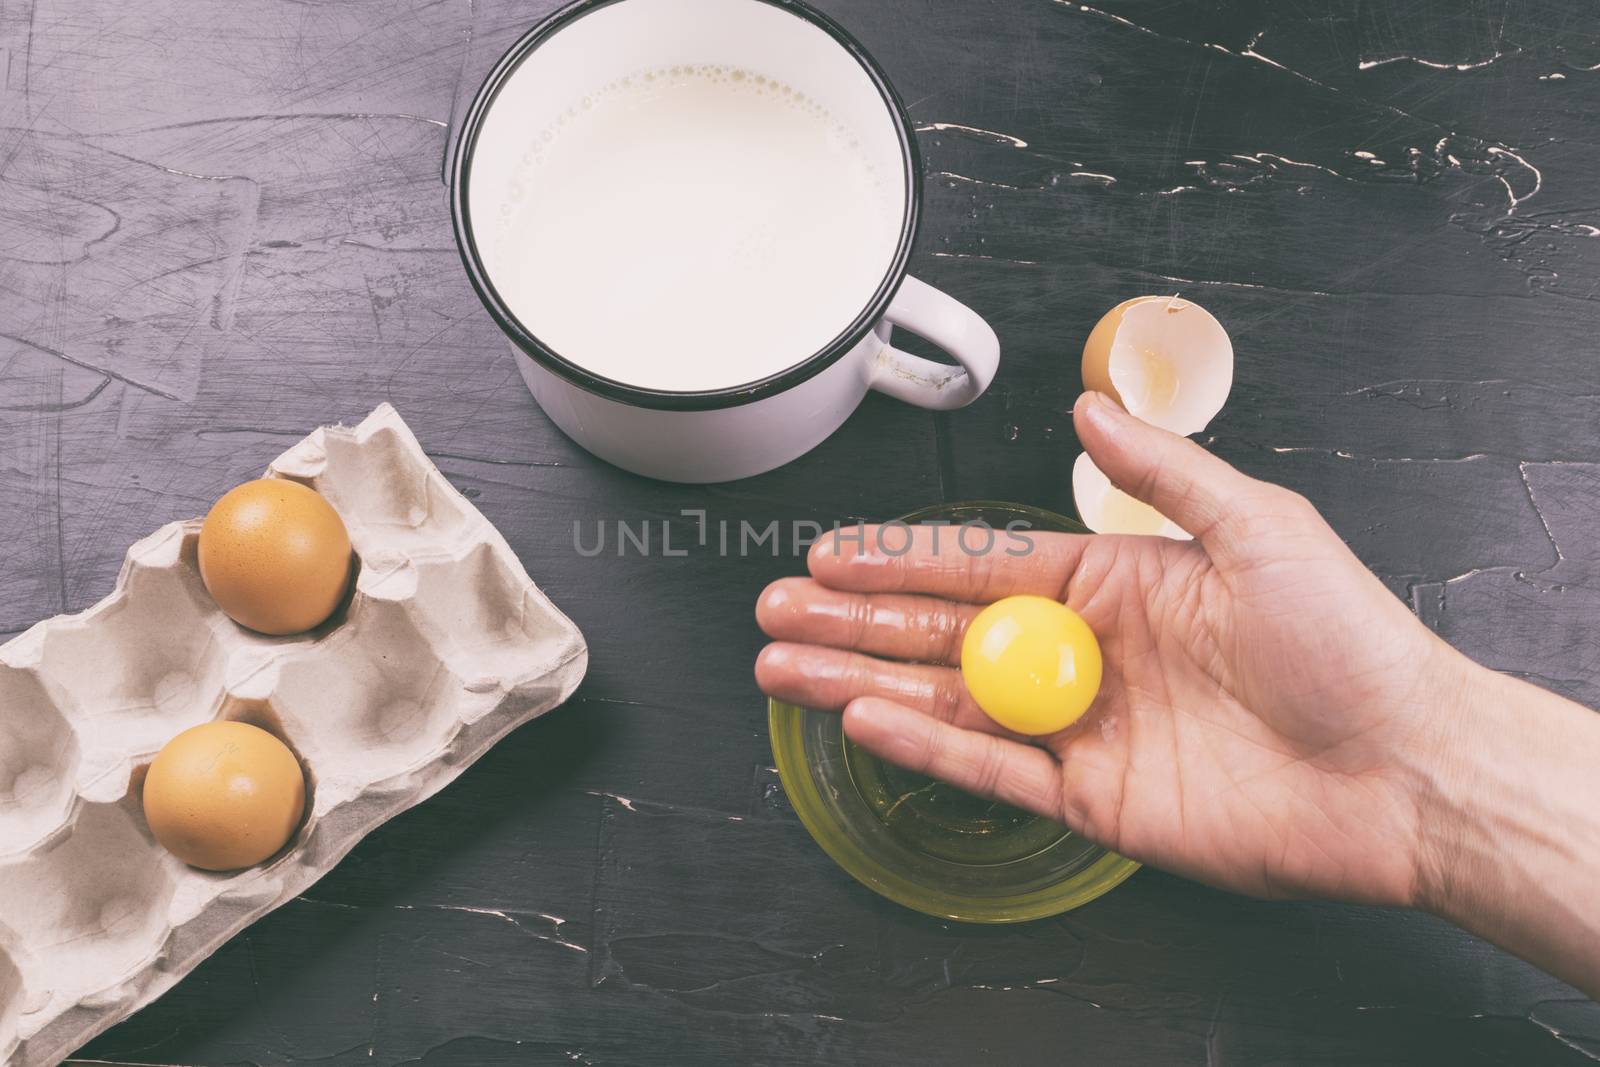 A man prepares eggnog